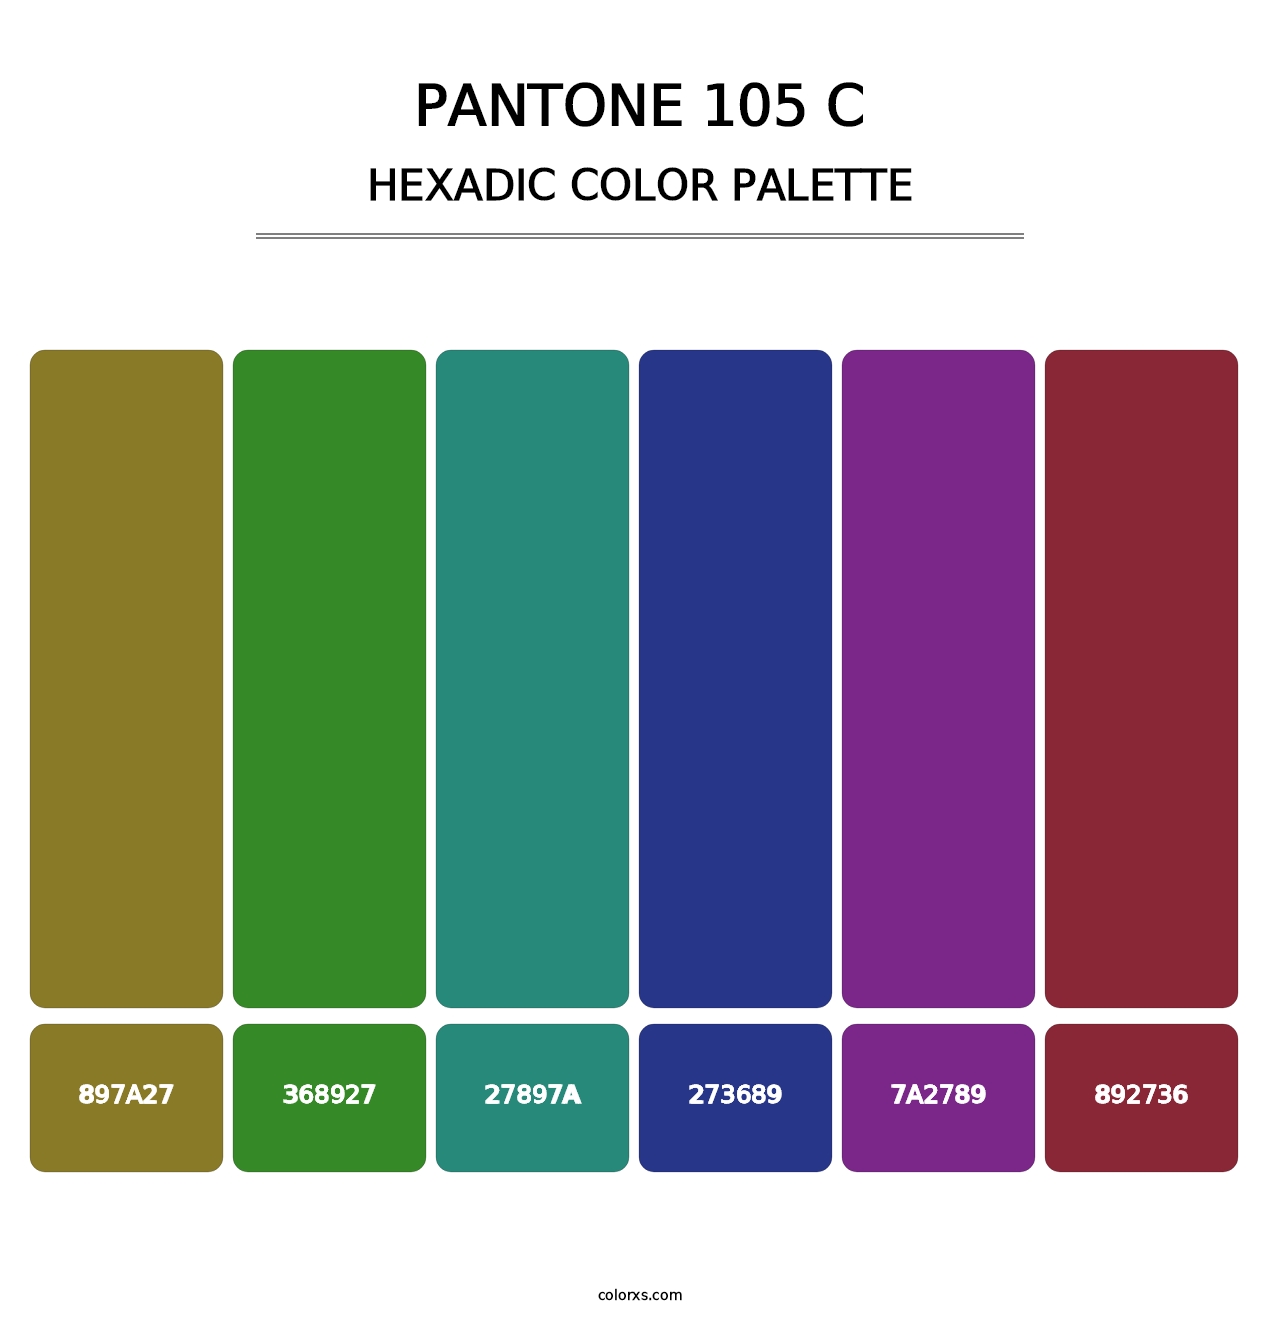 PANTONE 105 C - Hexadic Color Palette